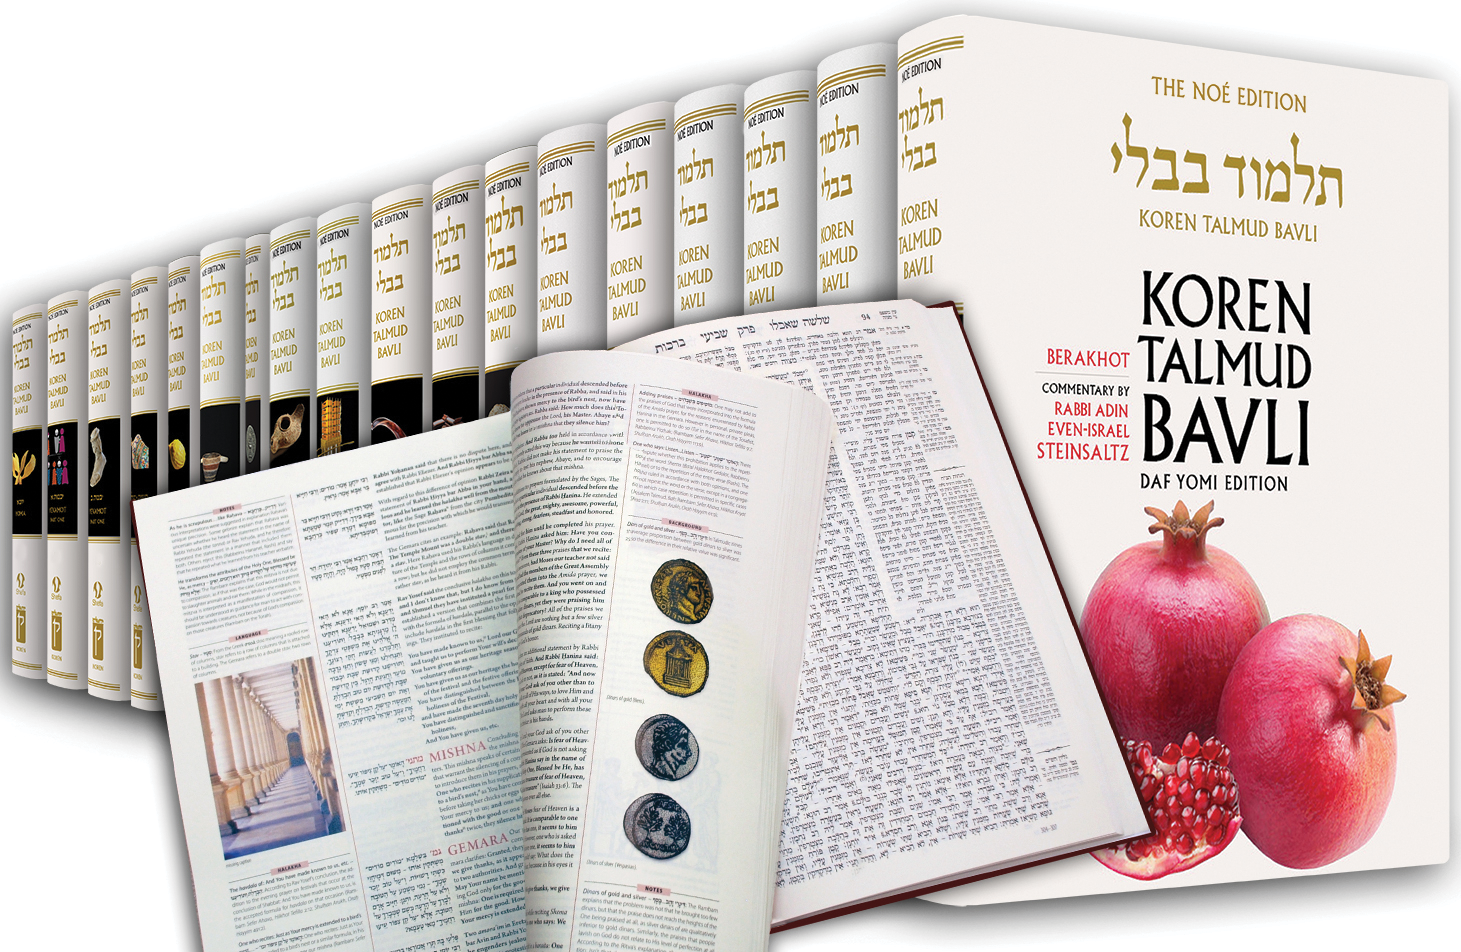 Learning the Koren Talmud Bavli with Caroline